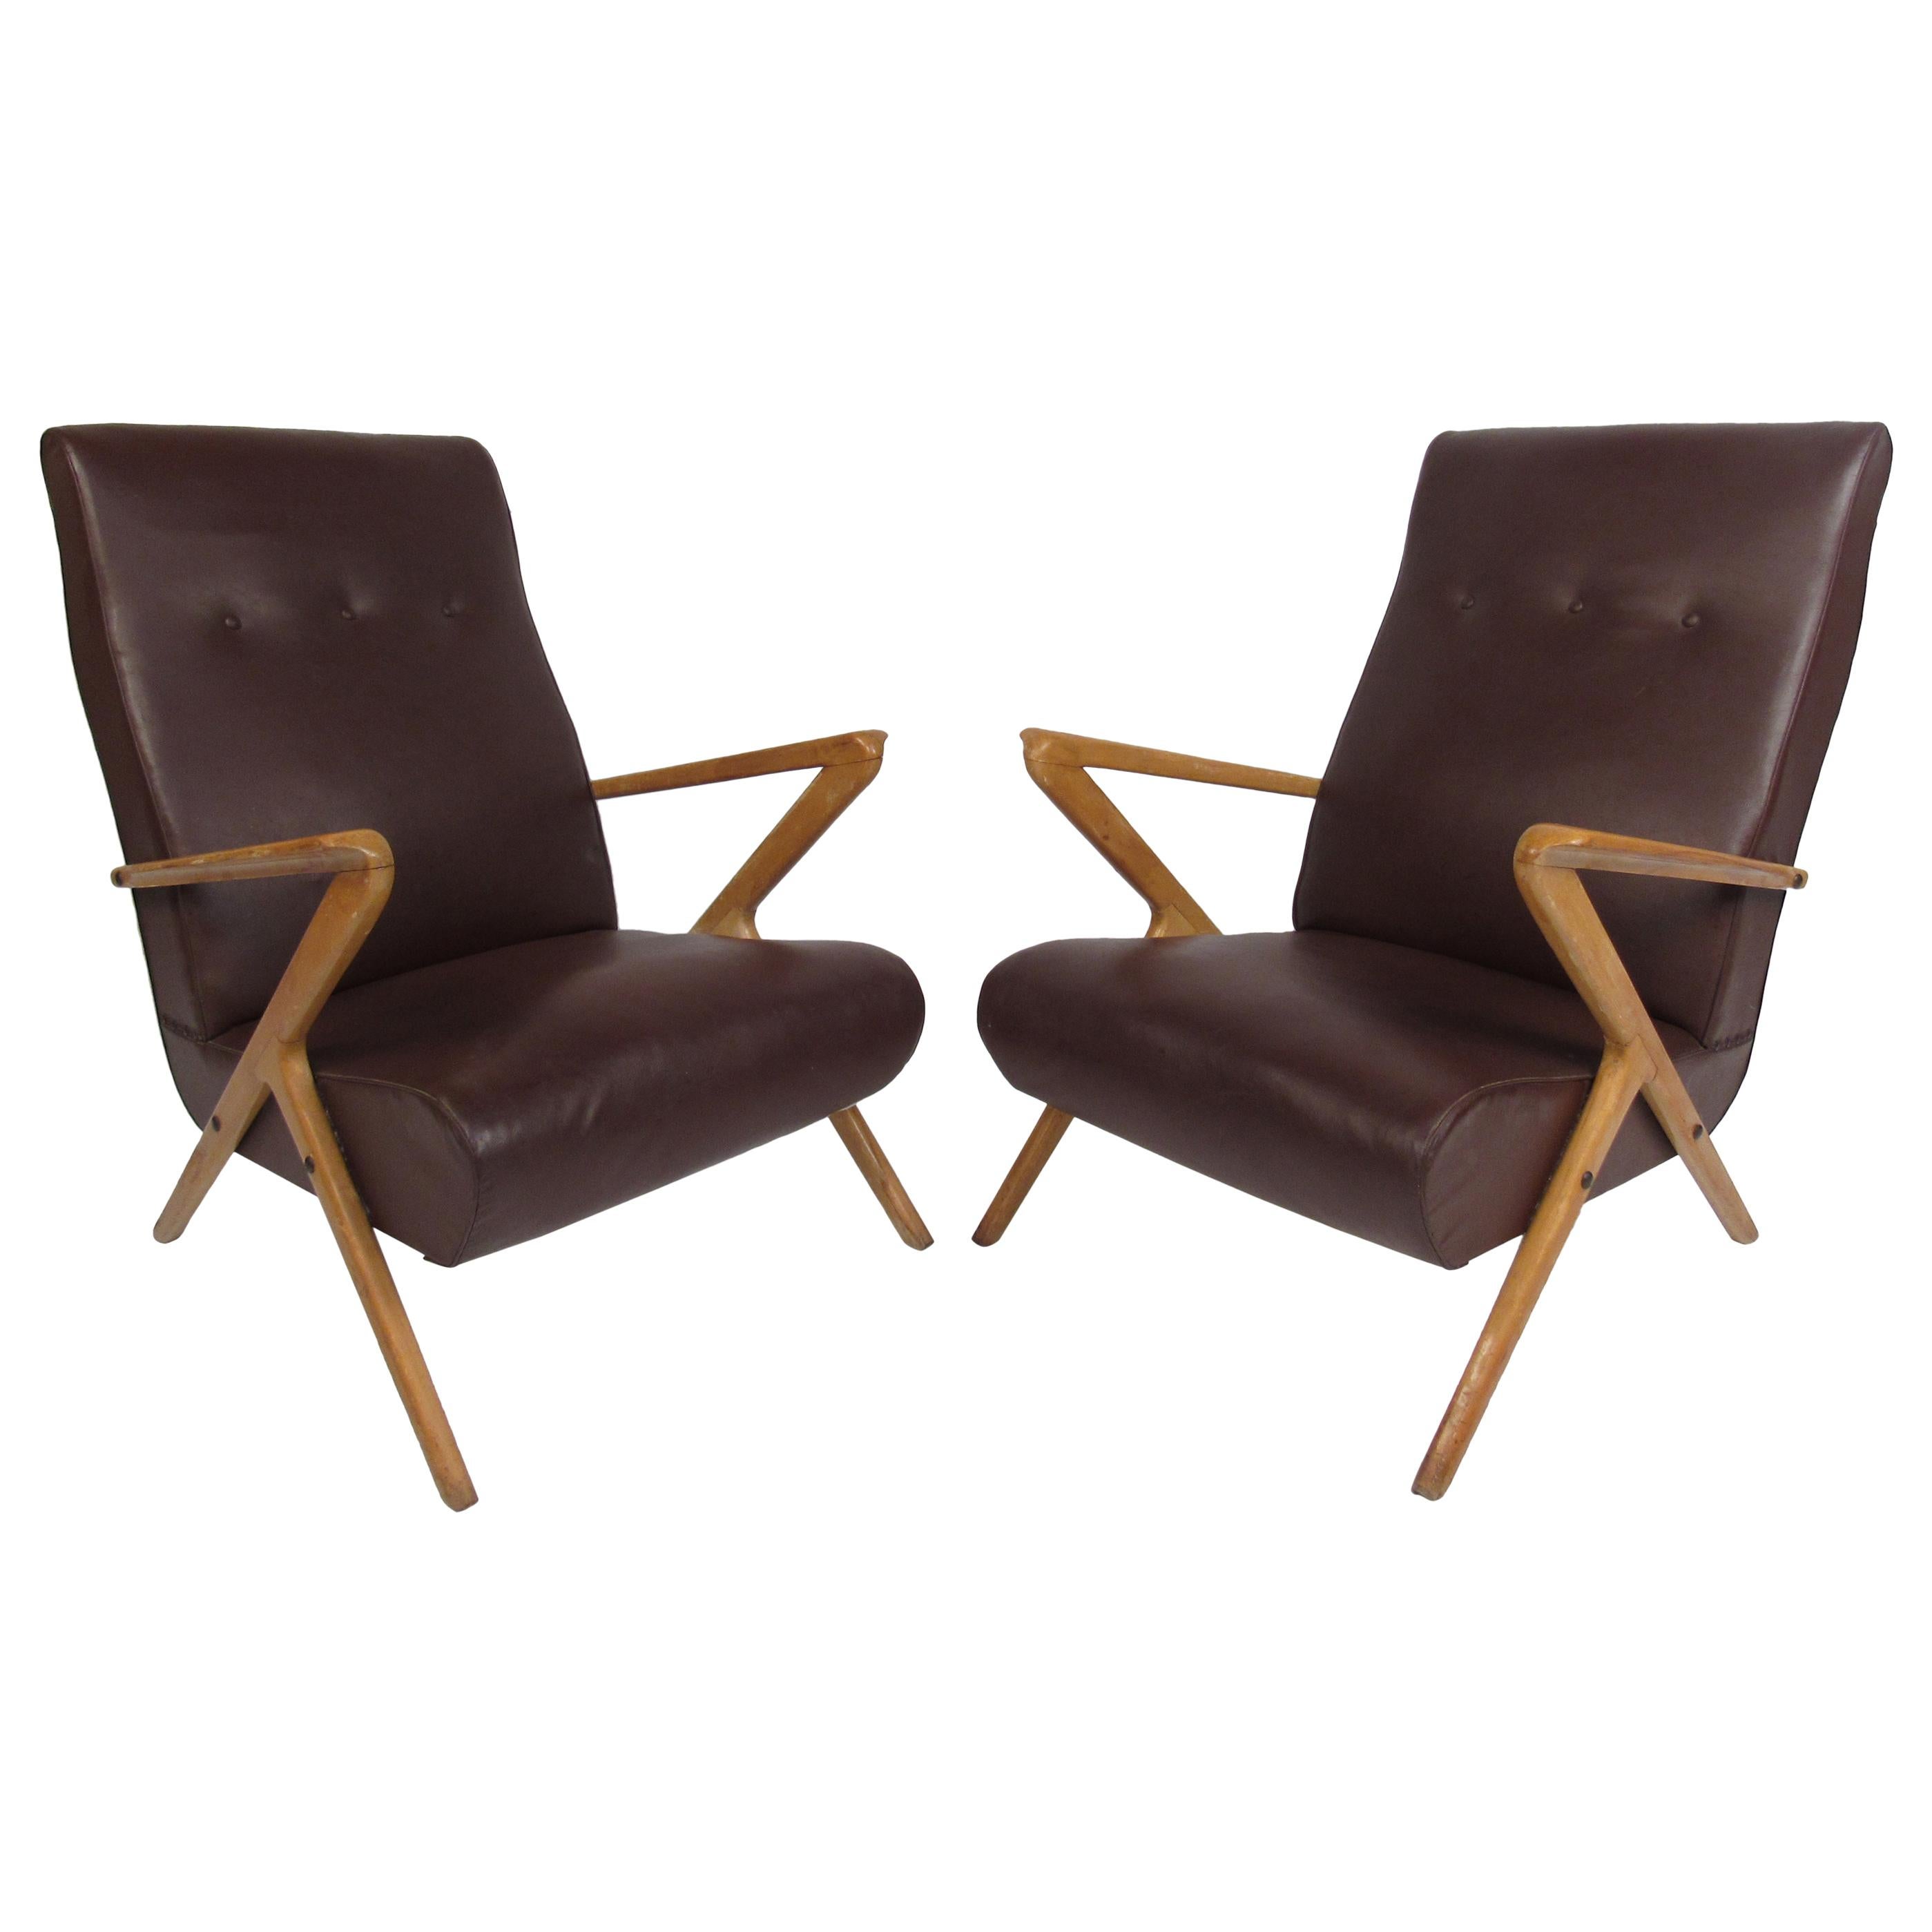 Pair of Midcentury Italian Lounge Chairs